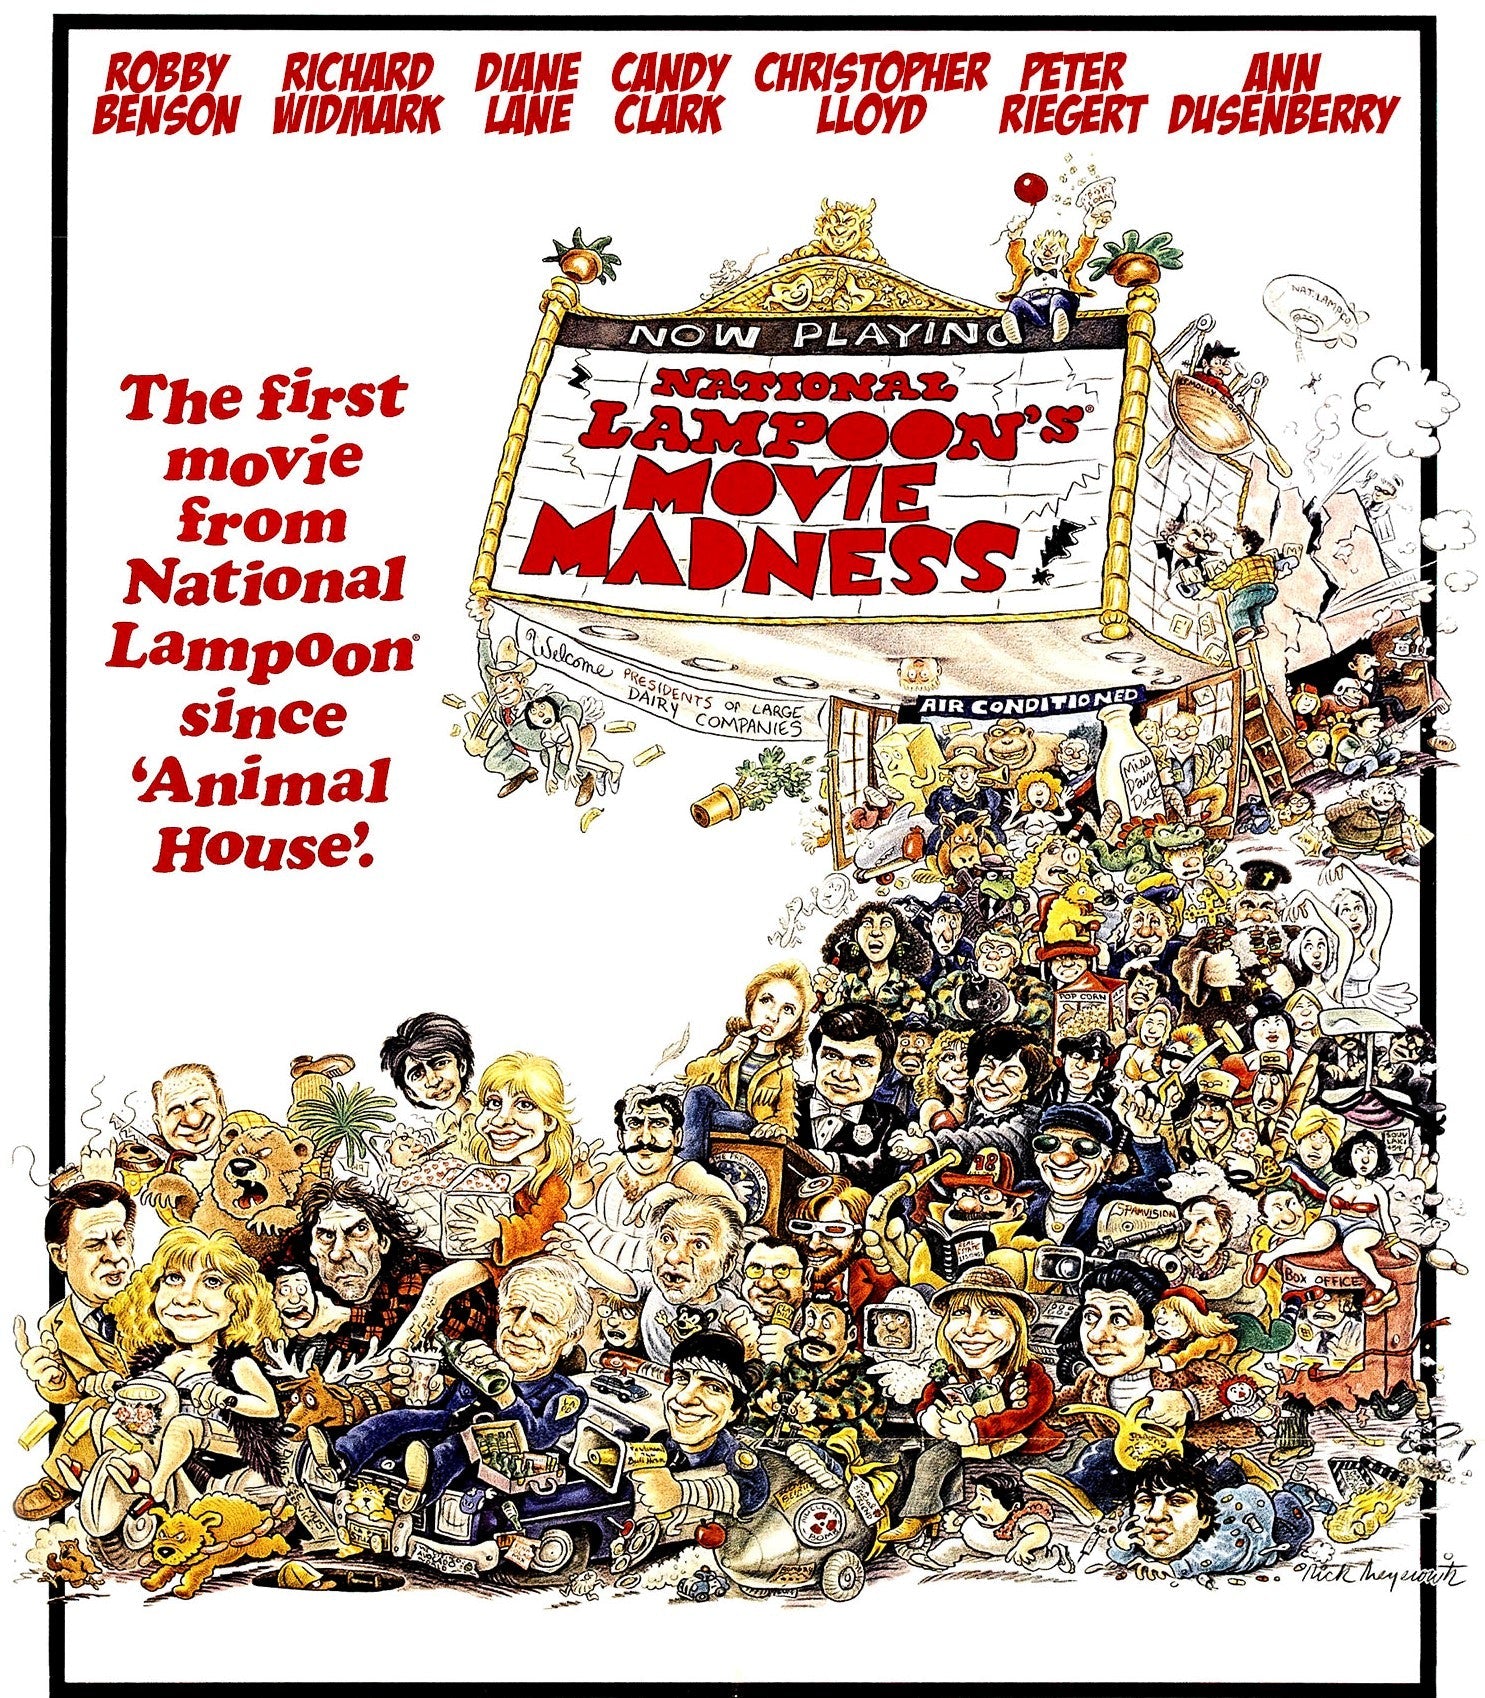 National Lampoons Movie Madness Blu-Ray Blu-Ray